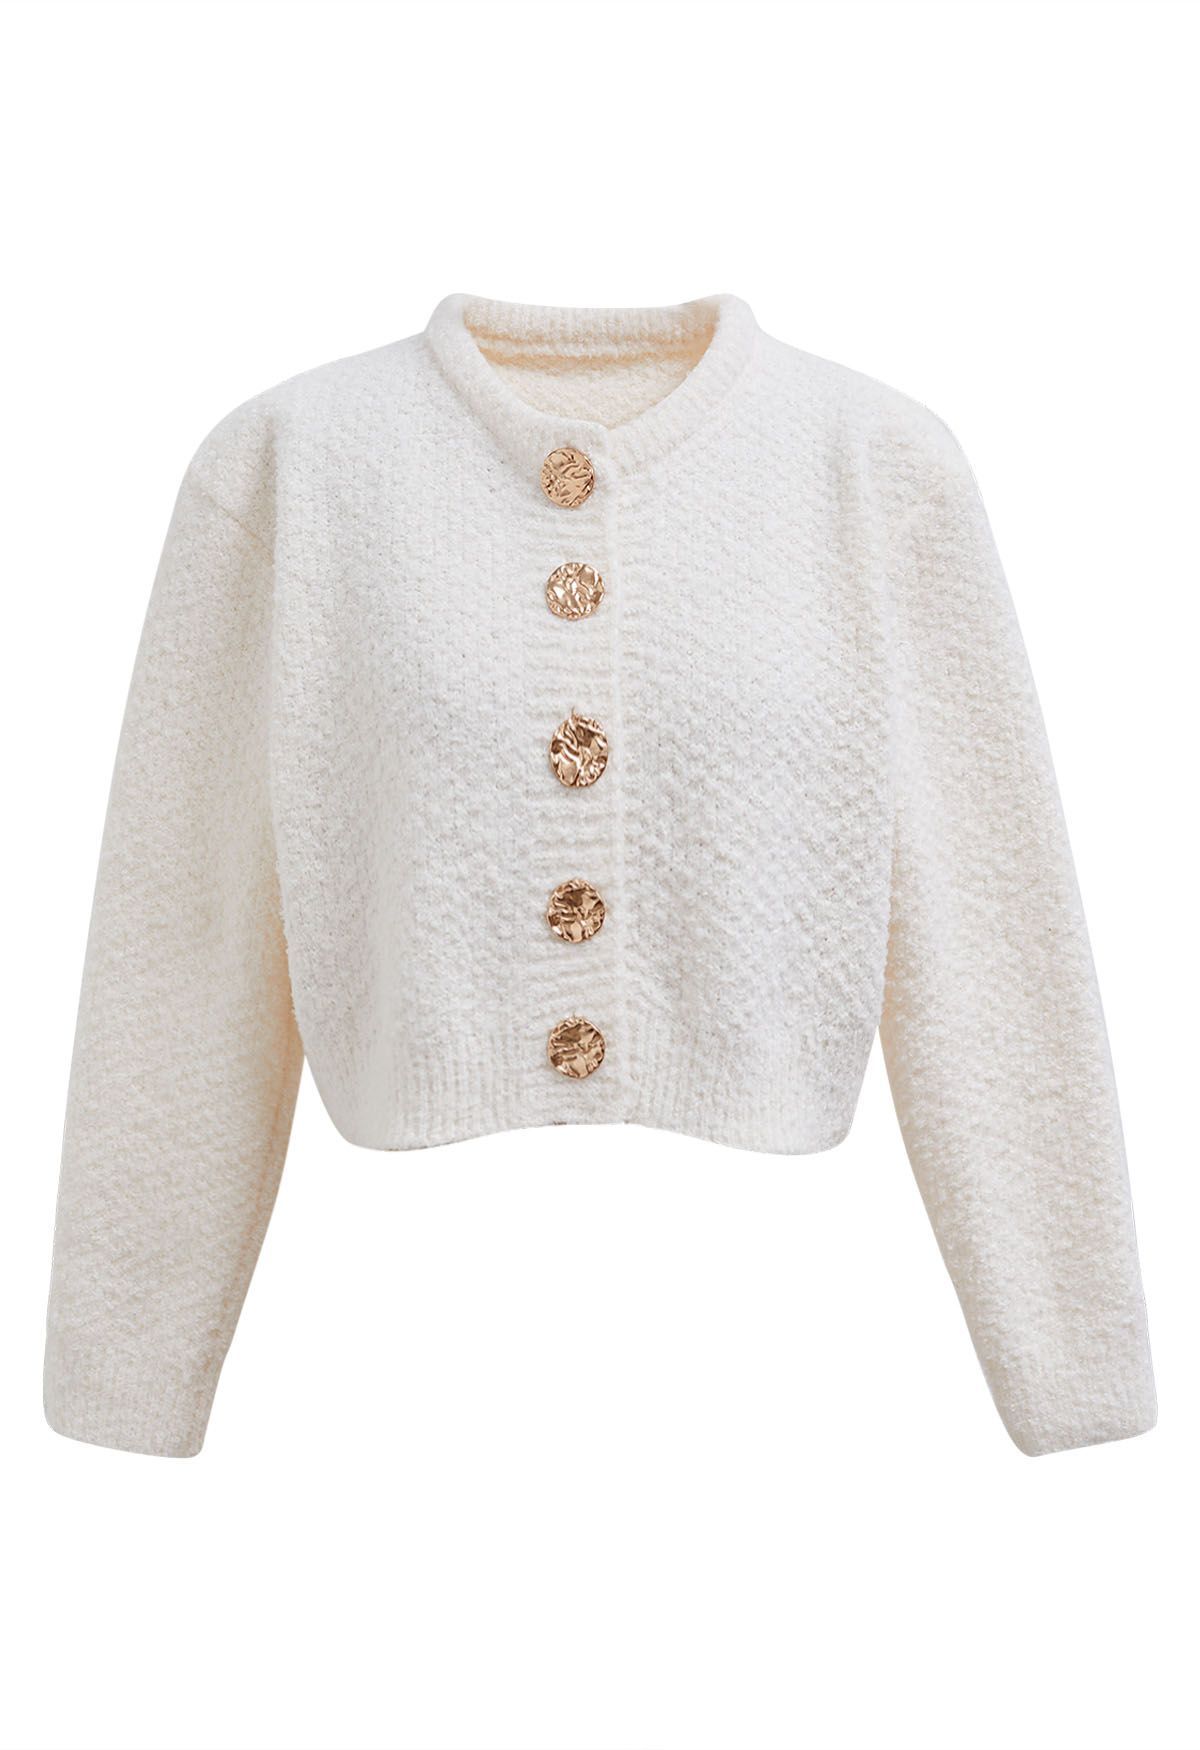 Golden Button Front Crop Knit Cardigan in Cream | Chicwish